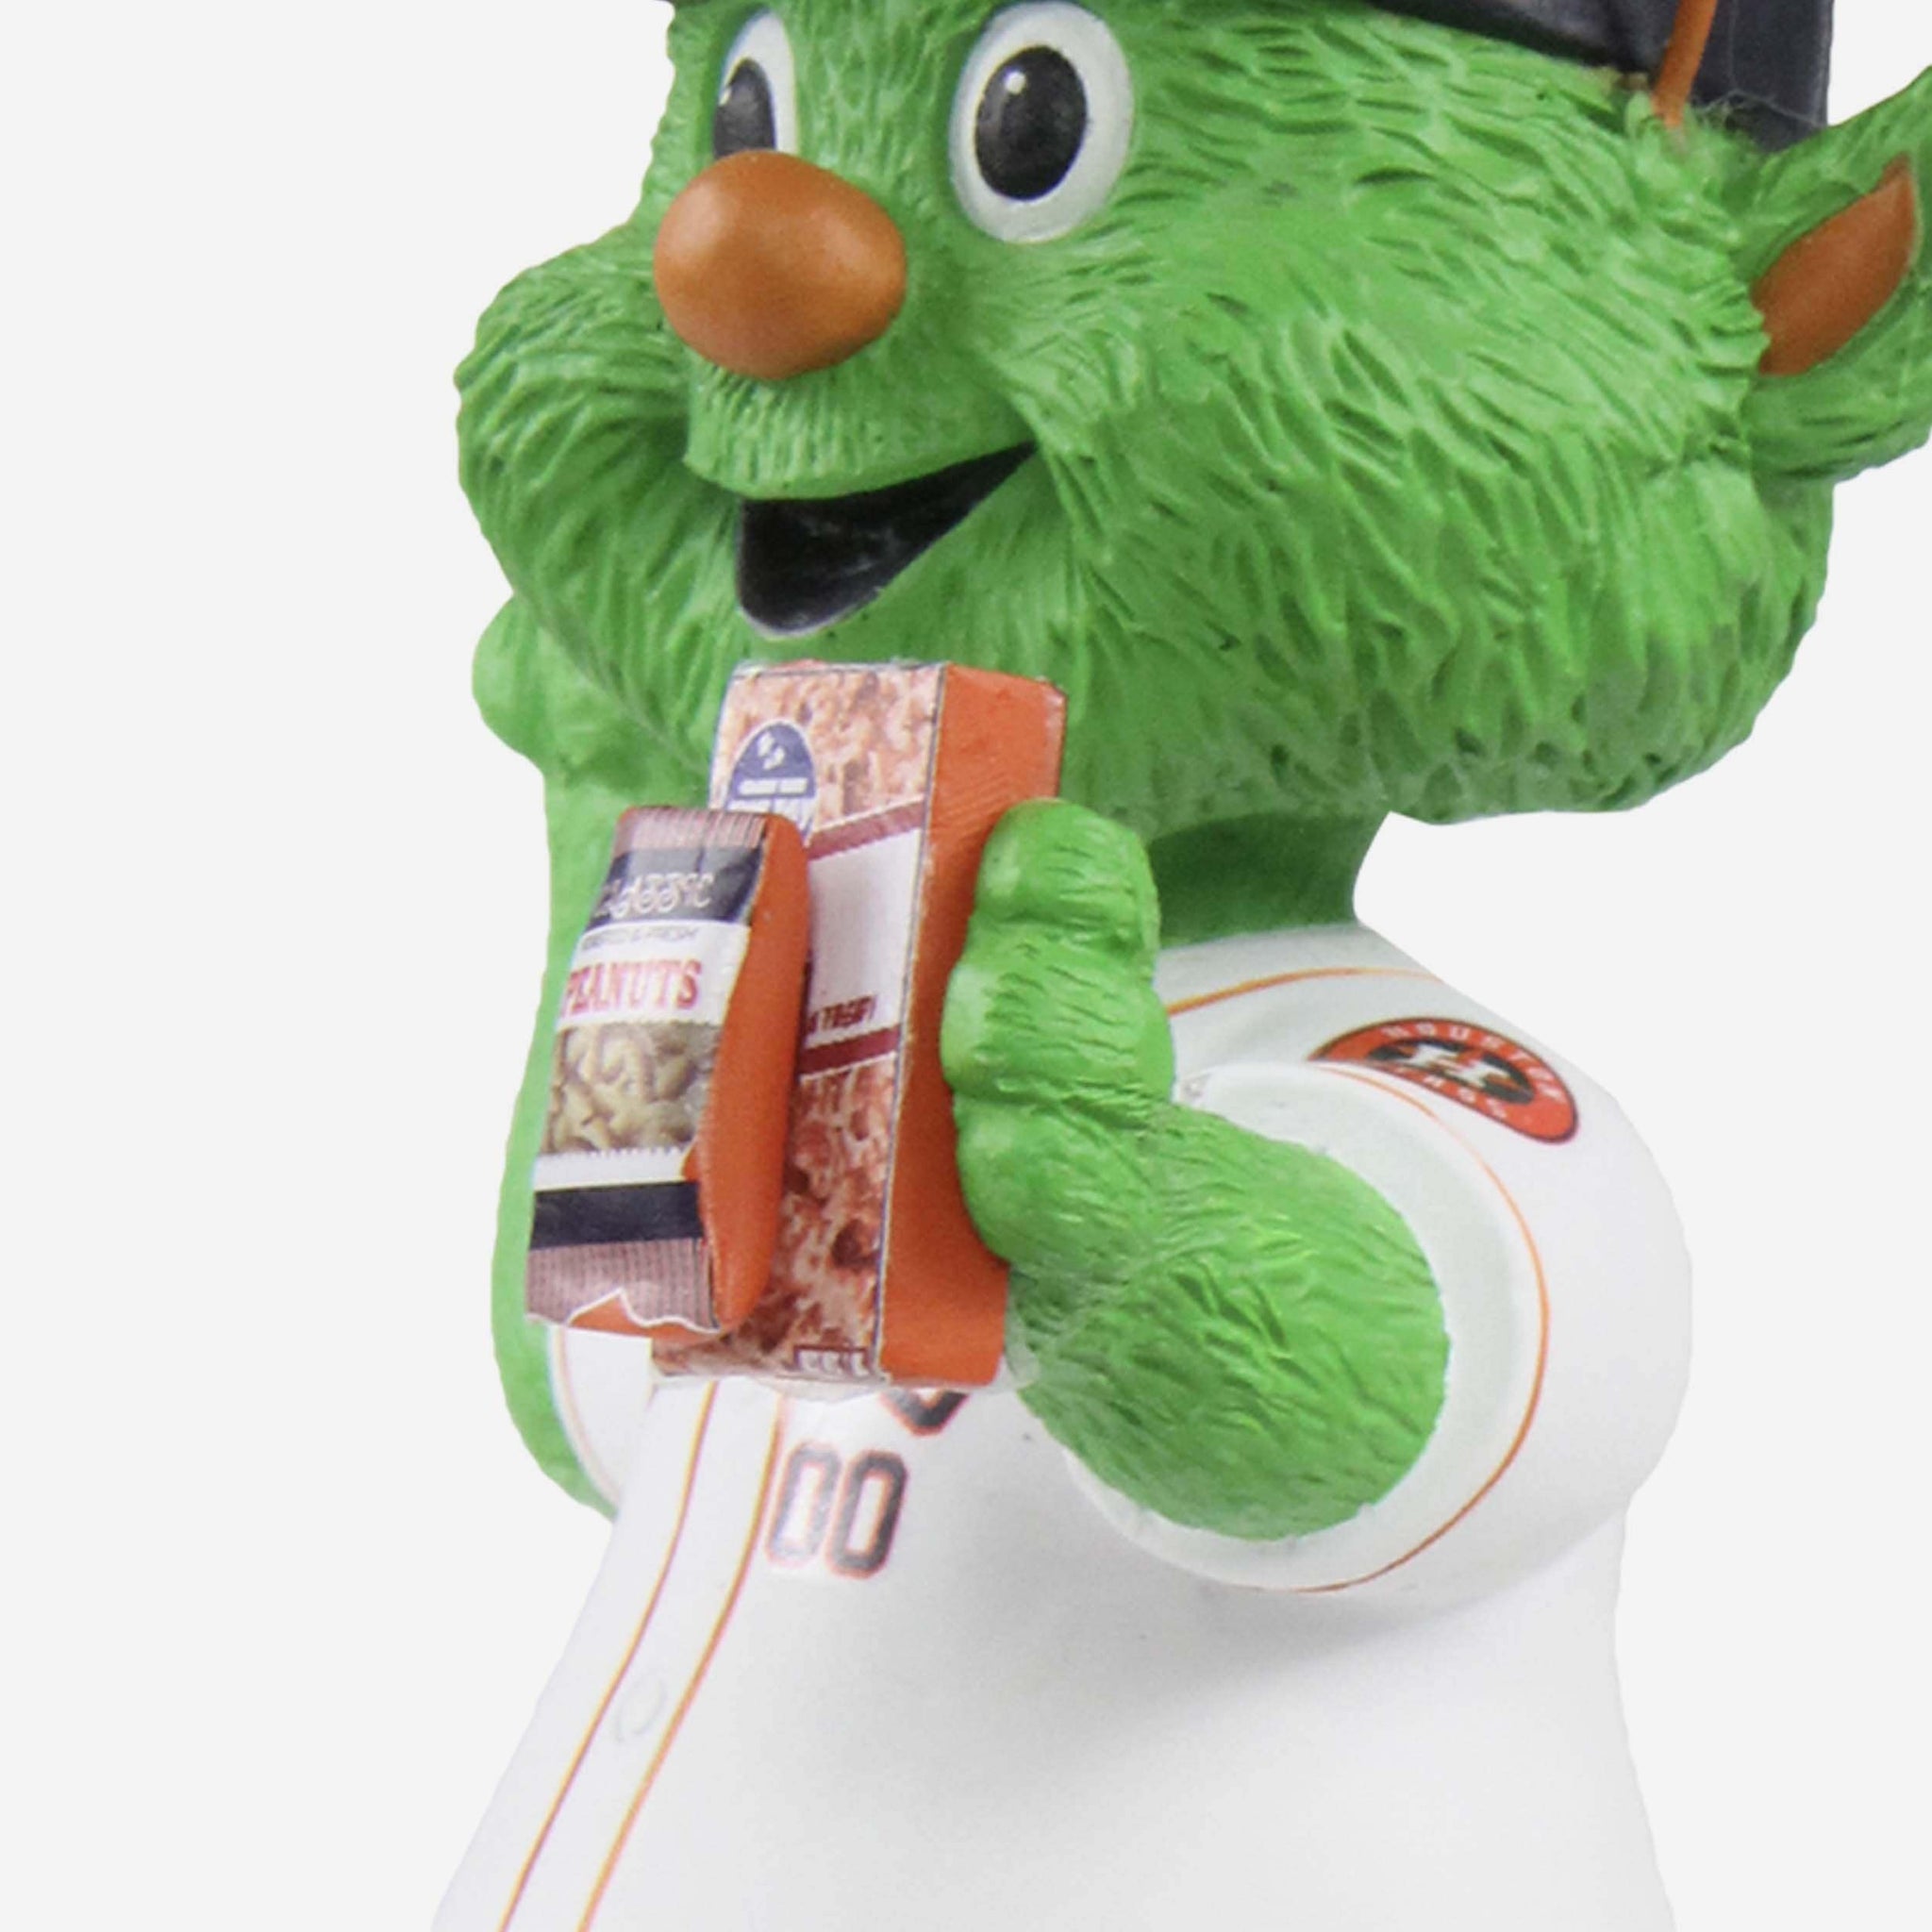 Orbit Houston Astros Mascot Mini Bighead Bobblehead FOCO